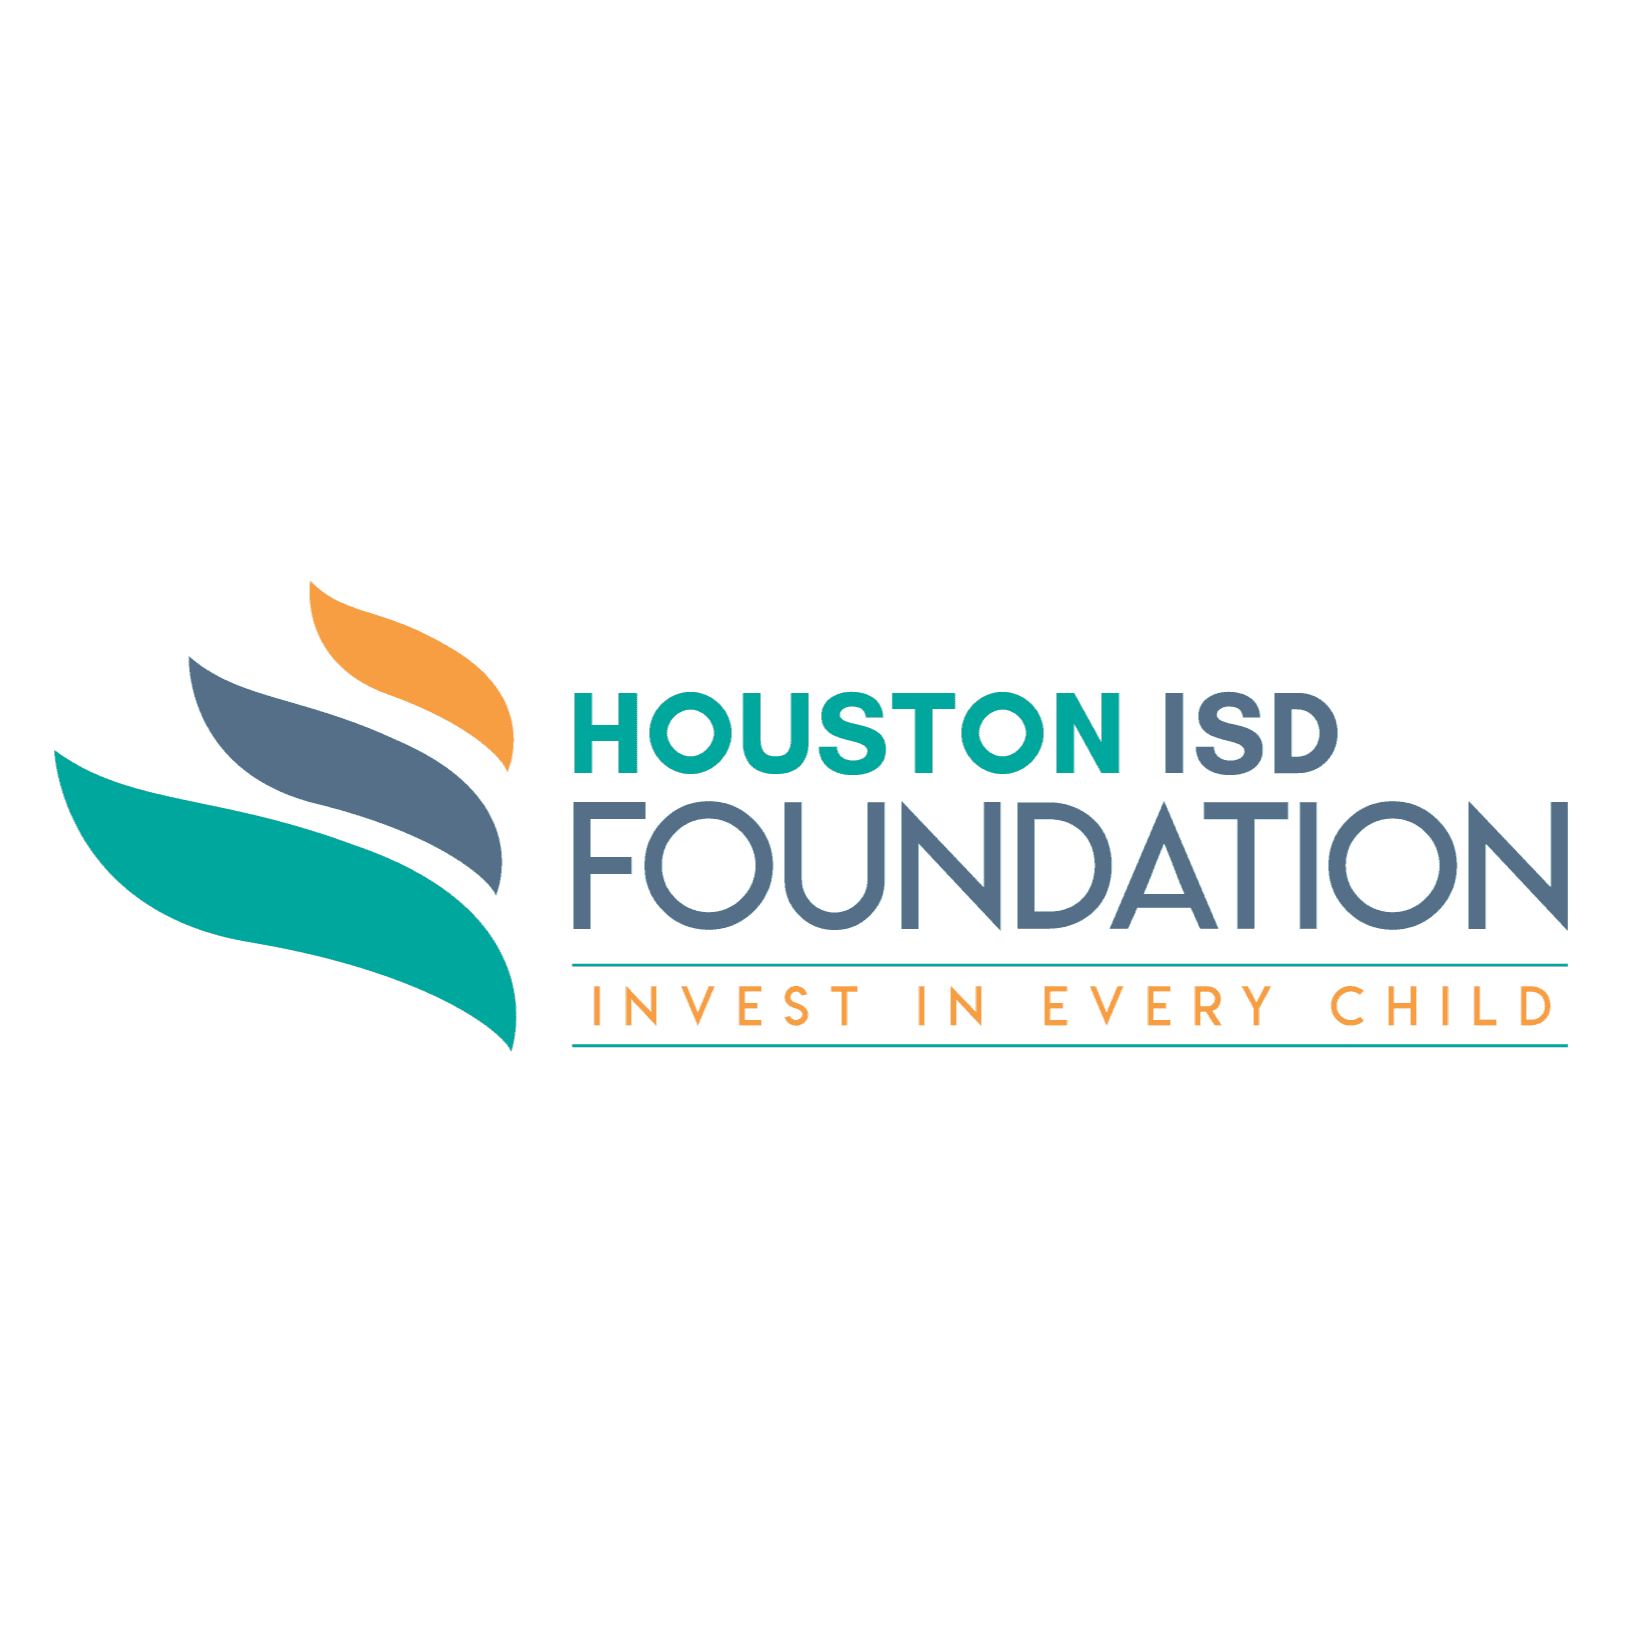 HISD Foundation's Logo